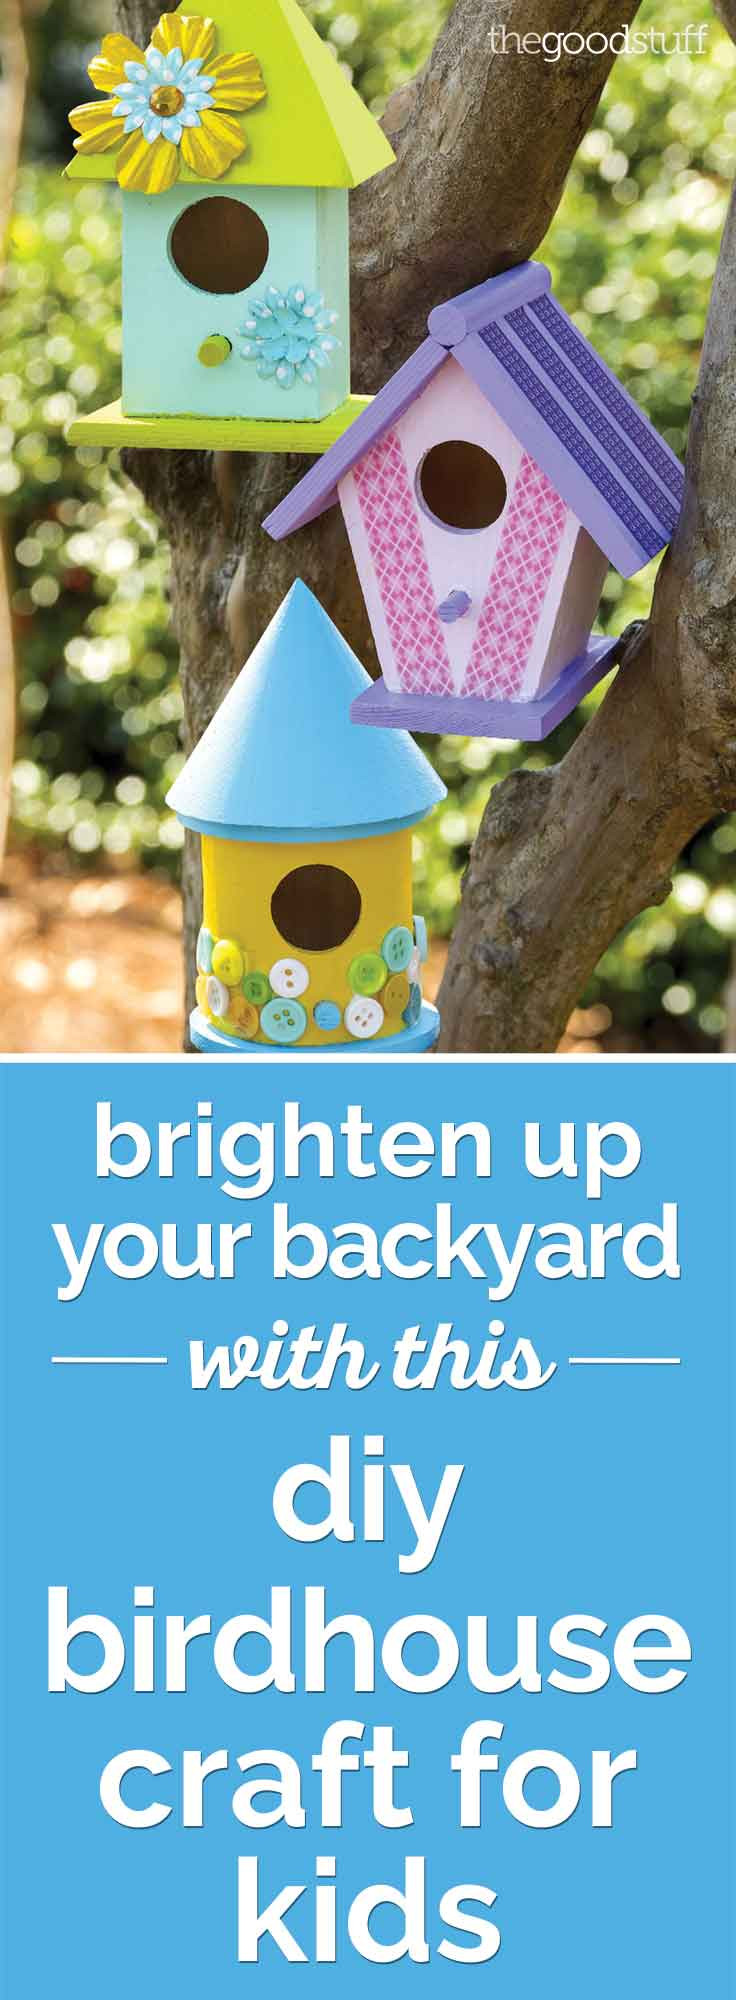 DIY Birdhouse For Kids
 How to Make a Spring DIY Birdhouse Craft for Kids